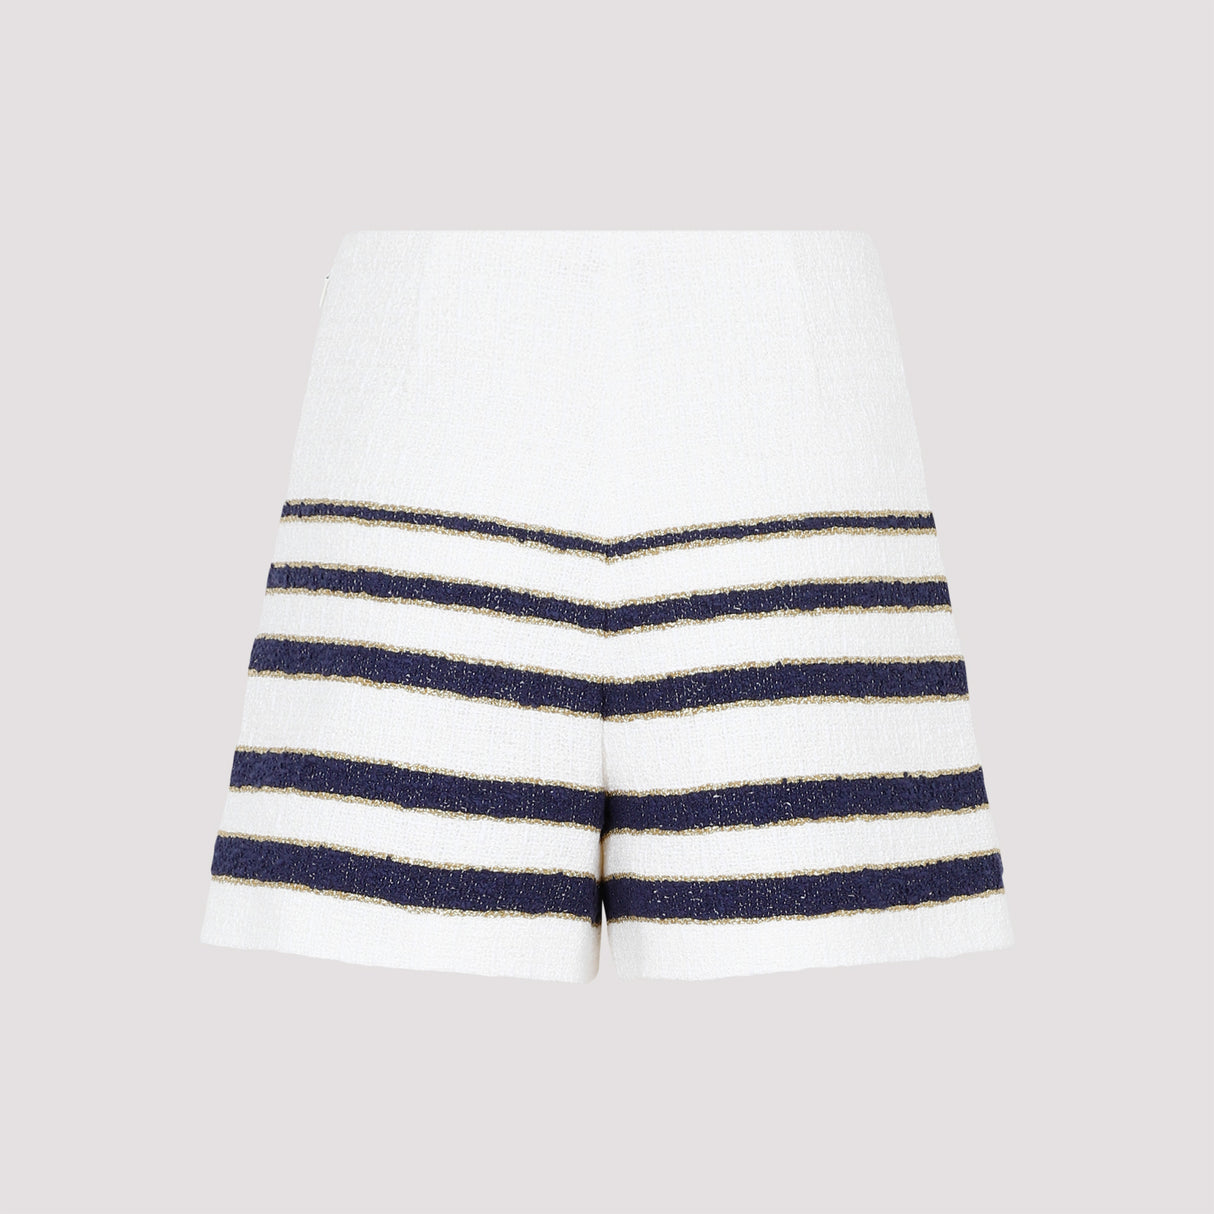 VALENTINO GARAVANI Navy Blue and Ivory Tweed Shorts with V Gold Details